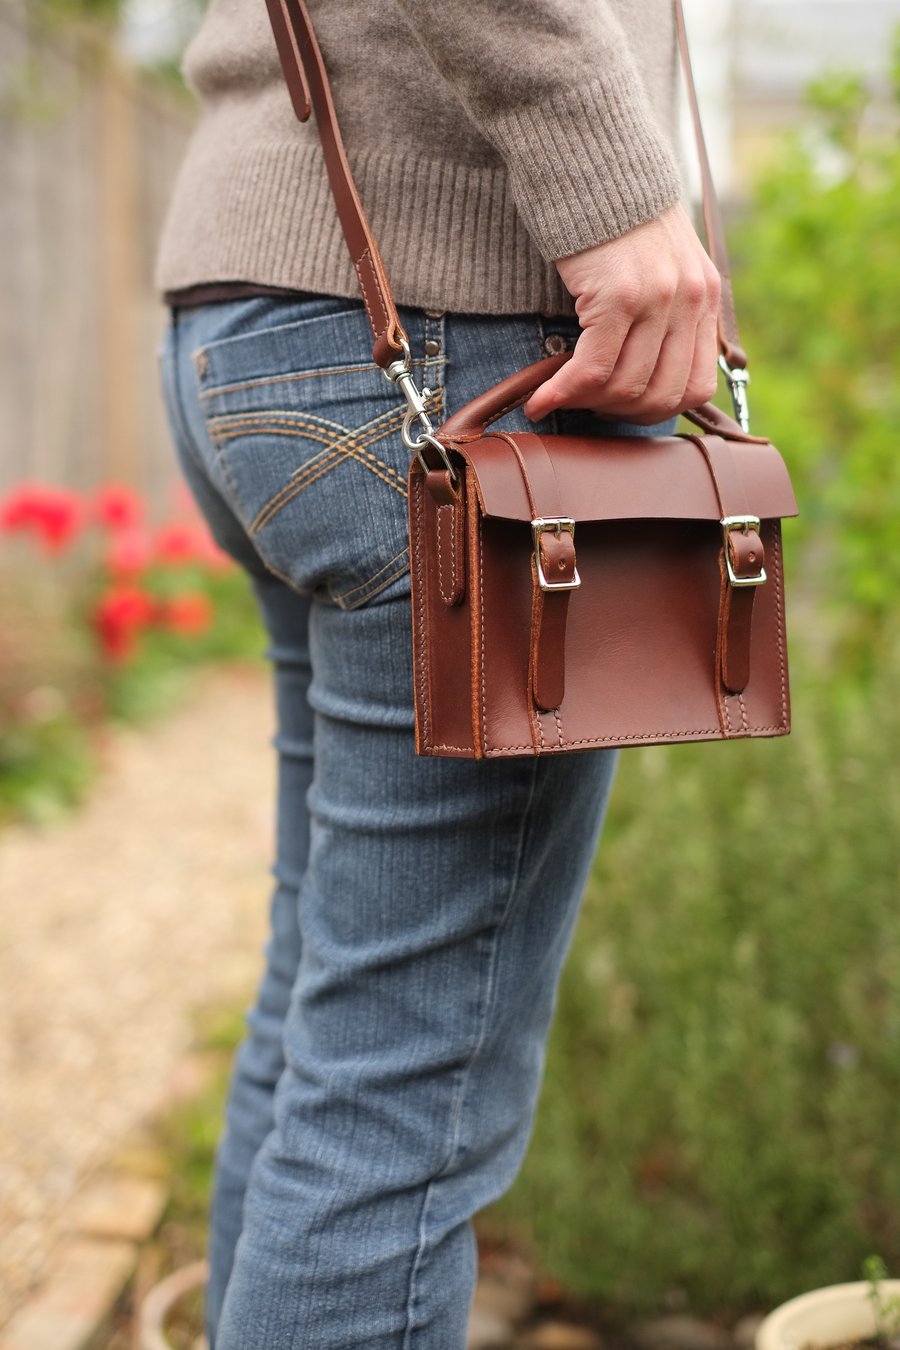 Mini satchel style hand bag with detachable shoulder strap